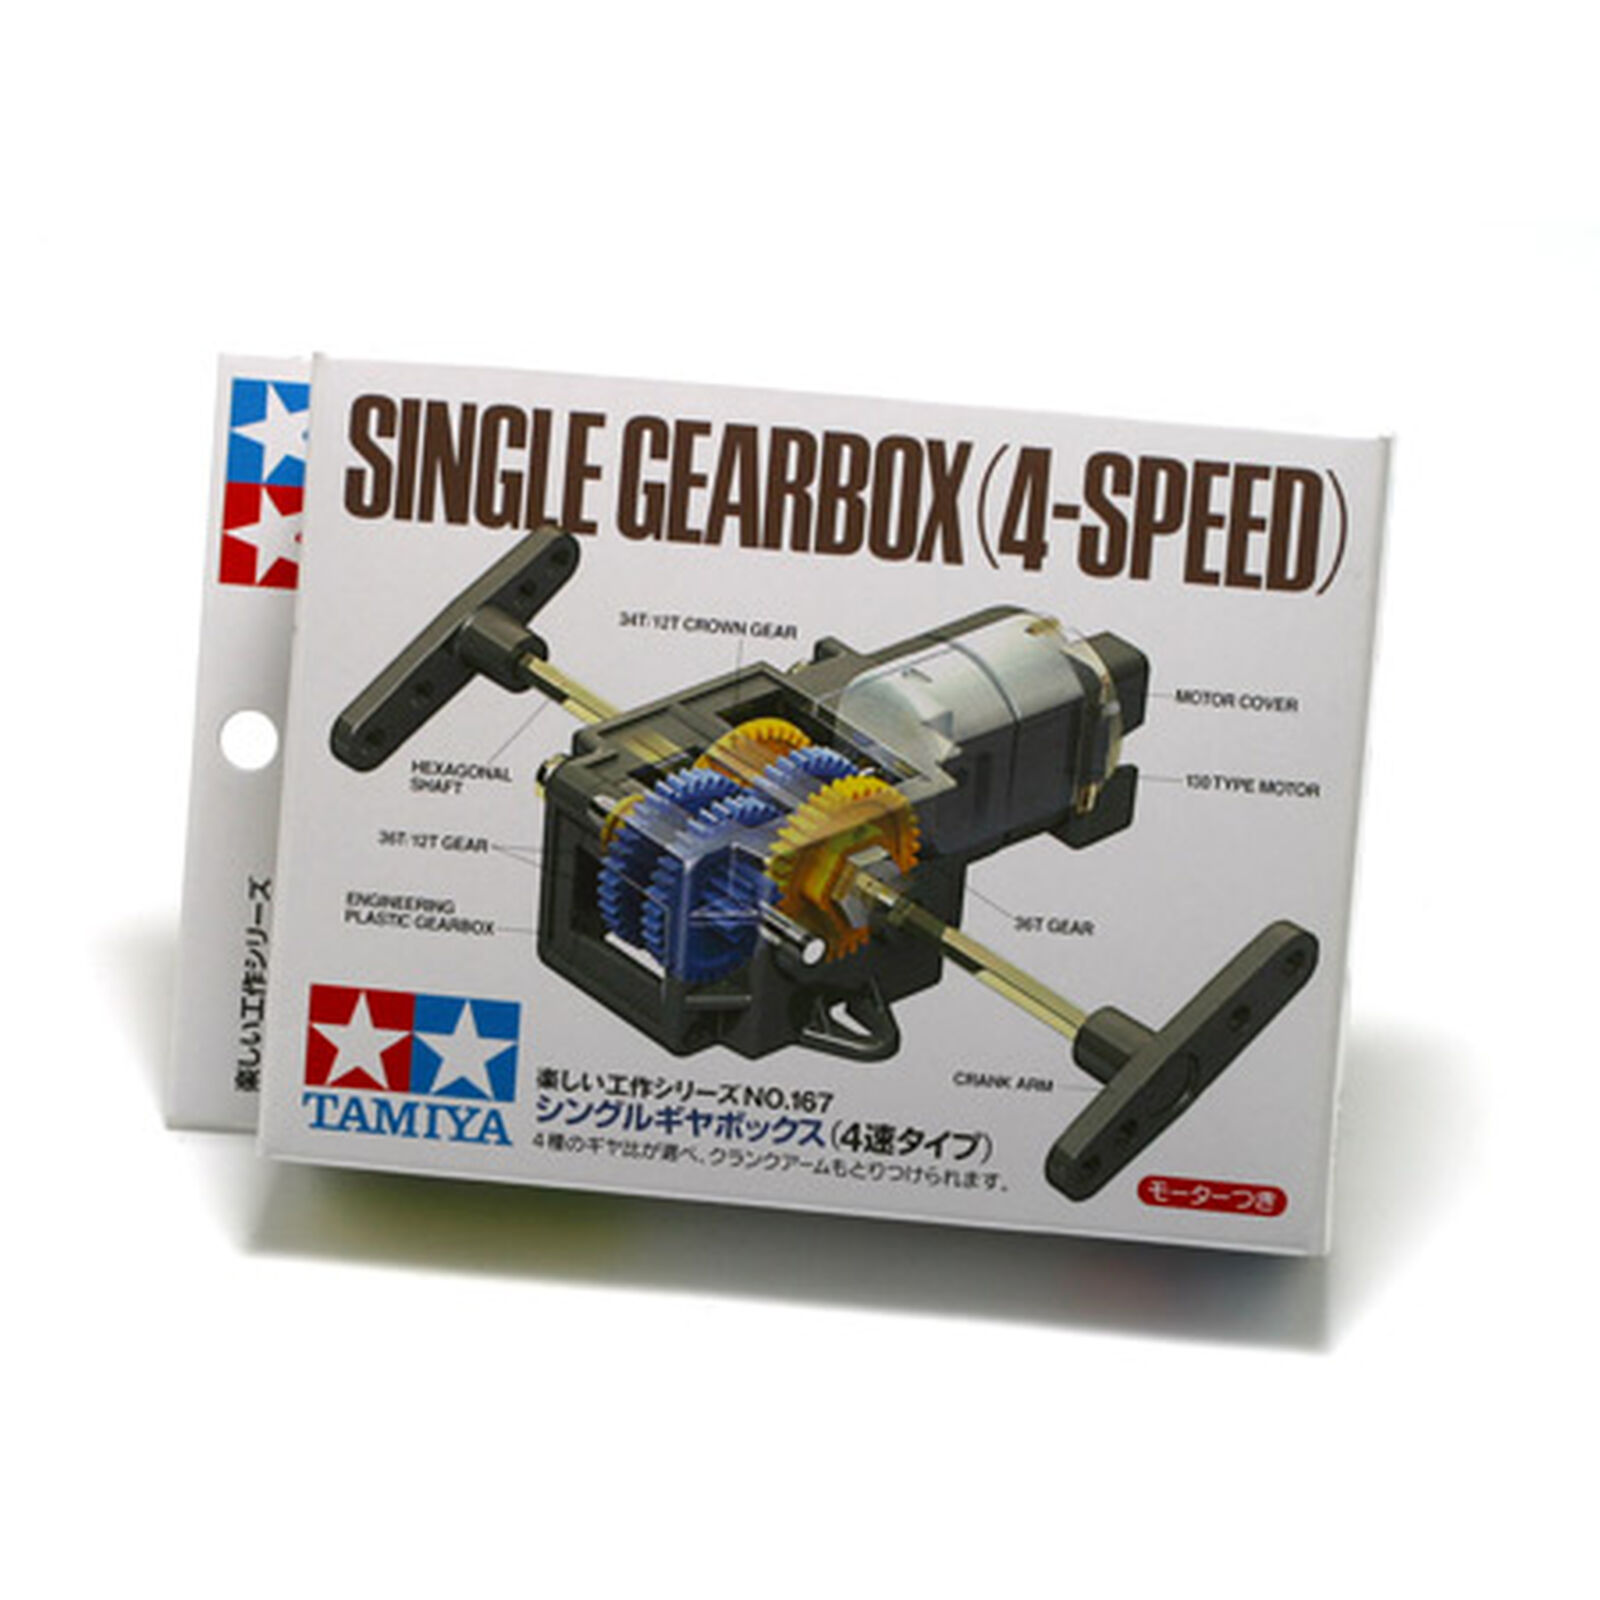 Single Gearbox, 4-Speed